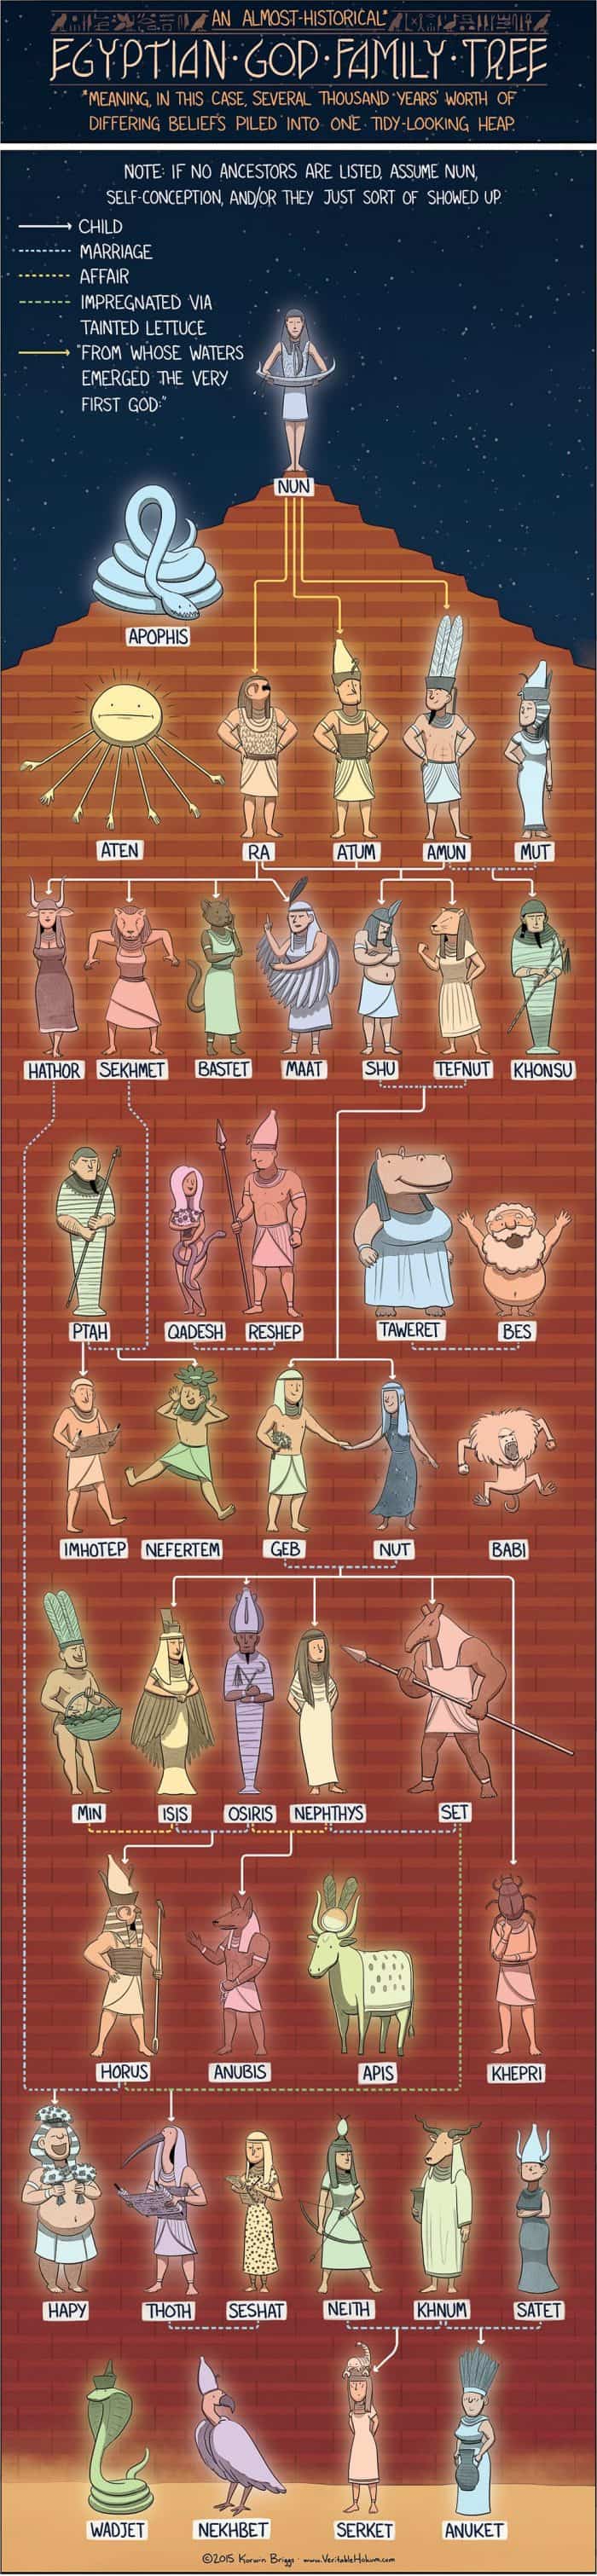 egyptian god family tree infographic